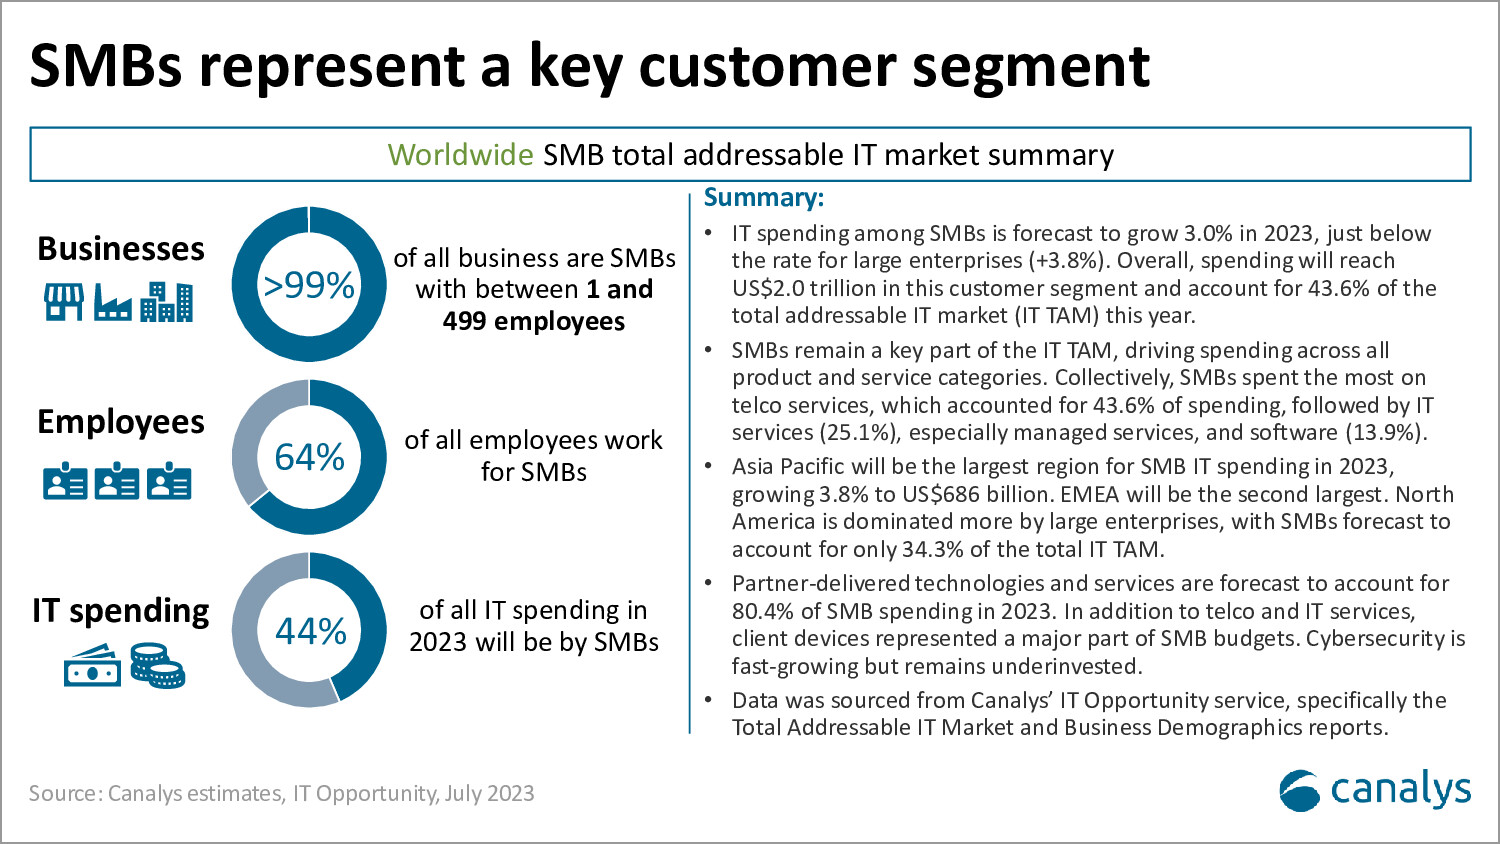 SMB total addressable IT market 2023 outlook